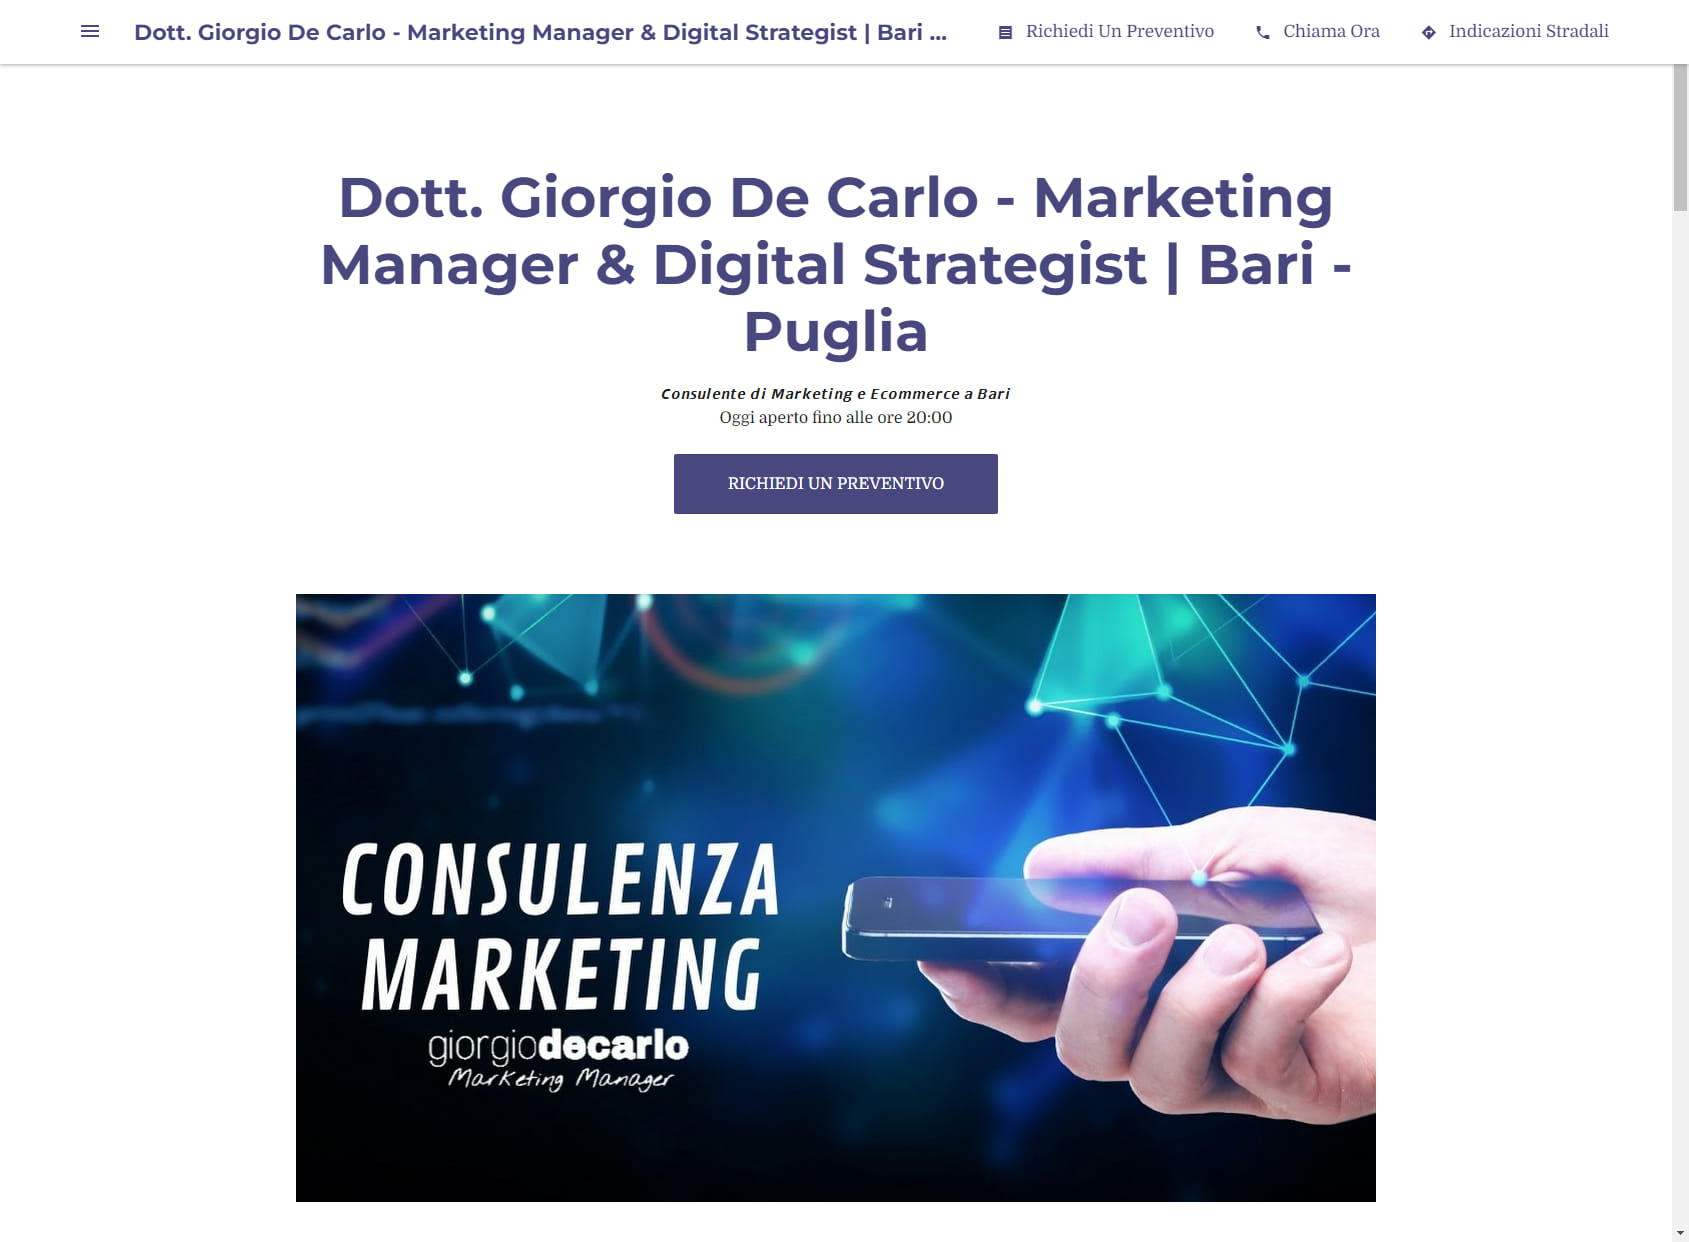 Dott. Giorgio De Carlo - Marketing Manager & Digital Strategist | Bari - Puglia